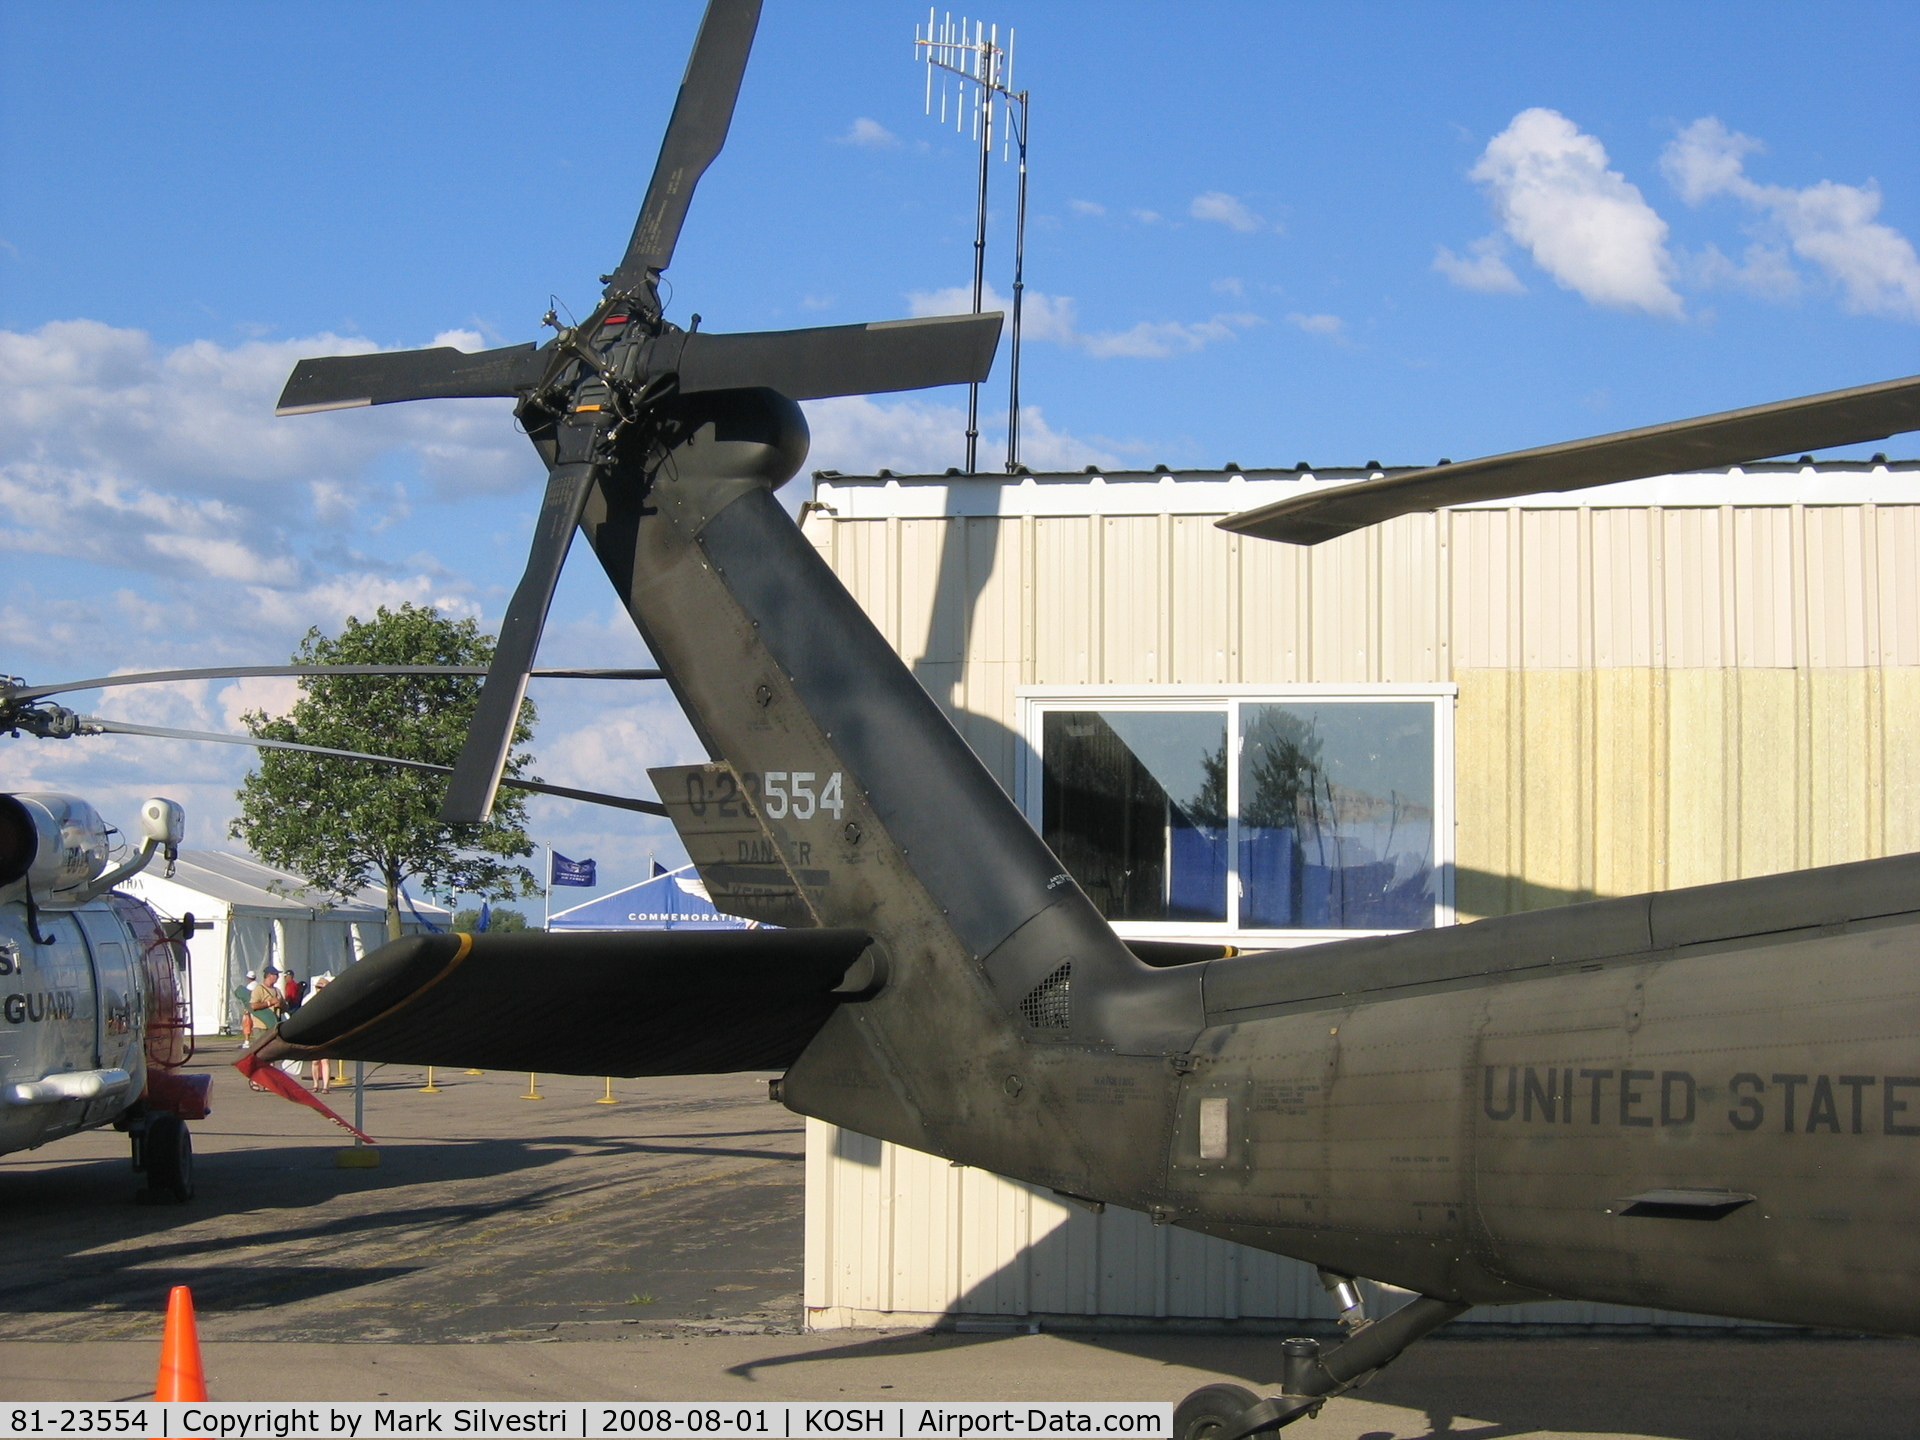 81-23554, 1981 Sikorsky UH-60A Black Hawk C/N 70.275, Oshkosh 2008